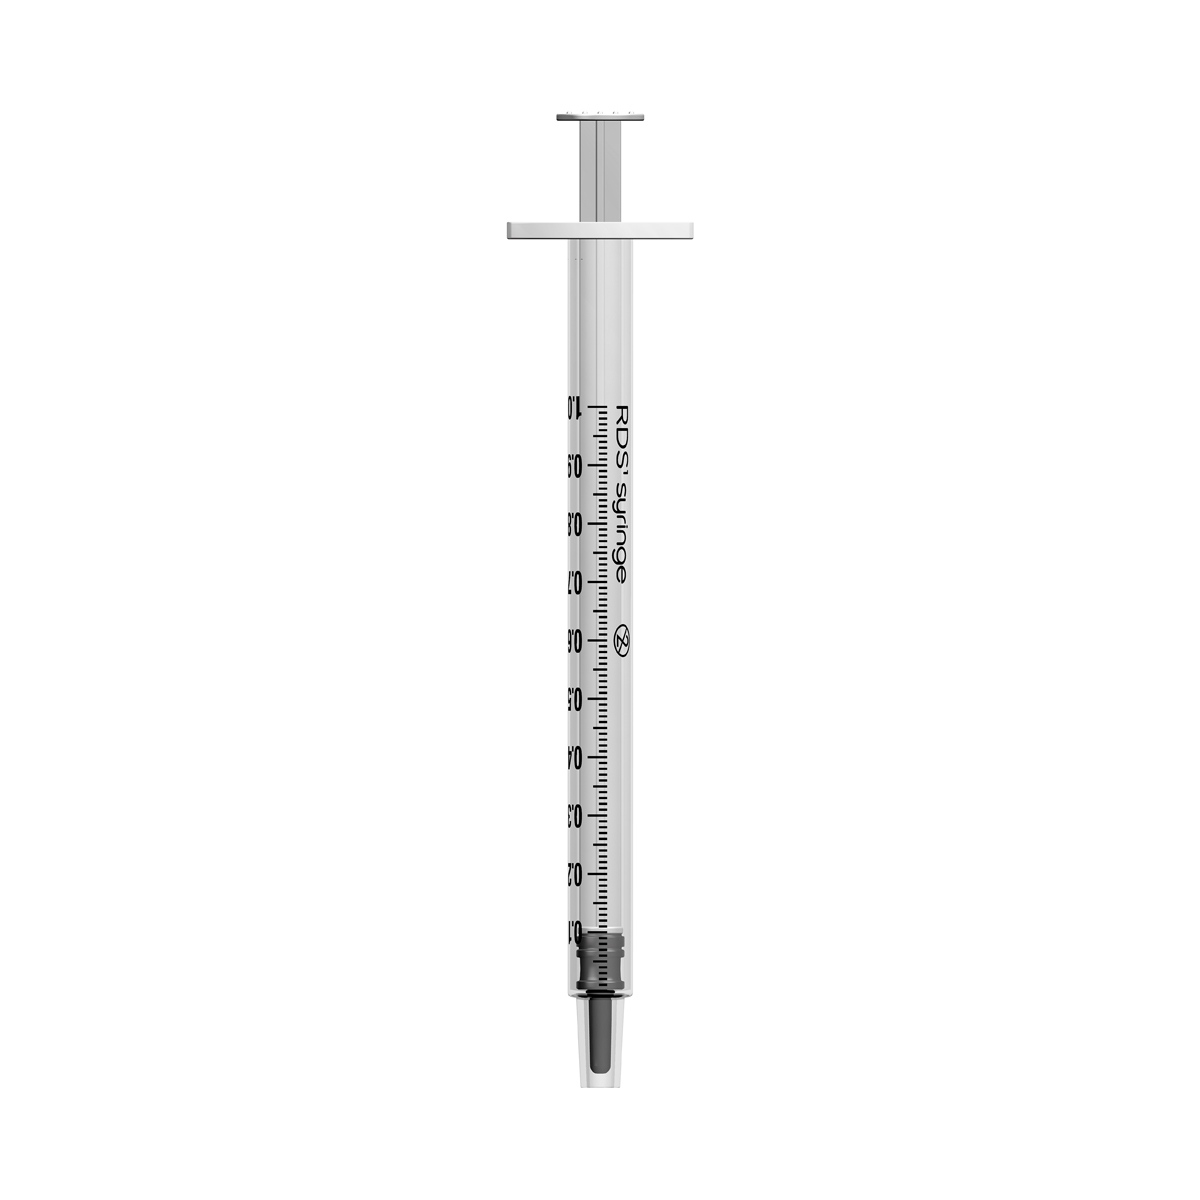 1ml Reduced Dead Space Syringe Barrel